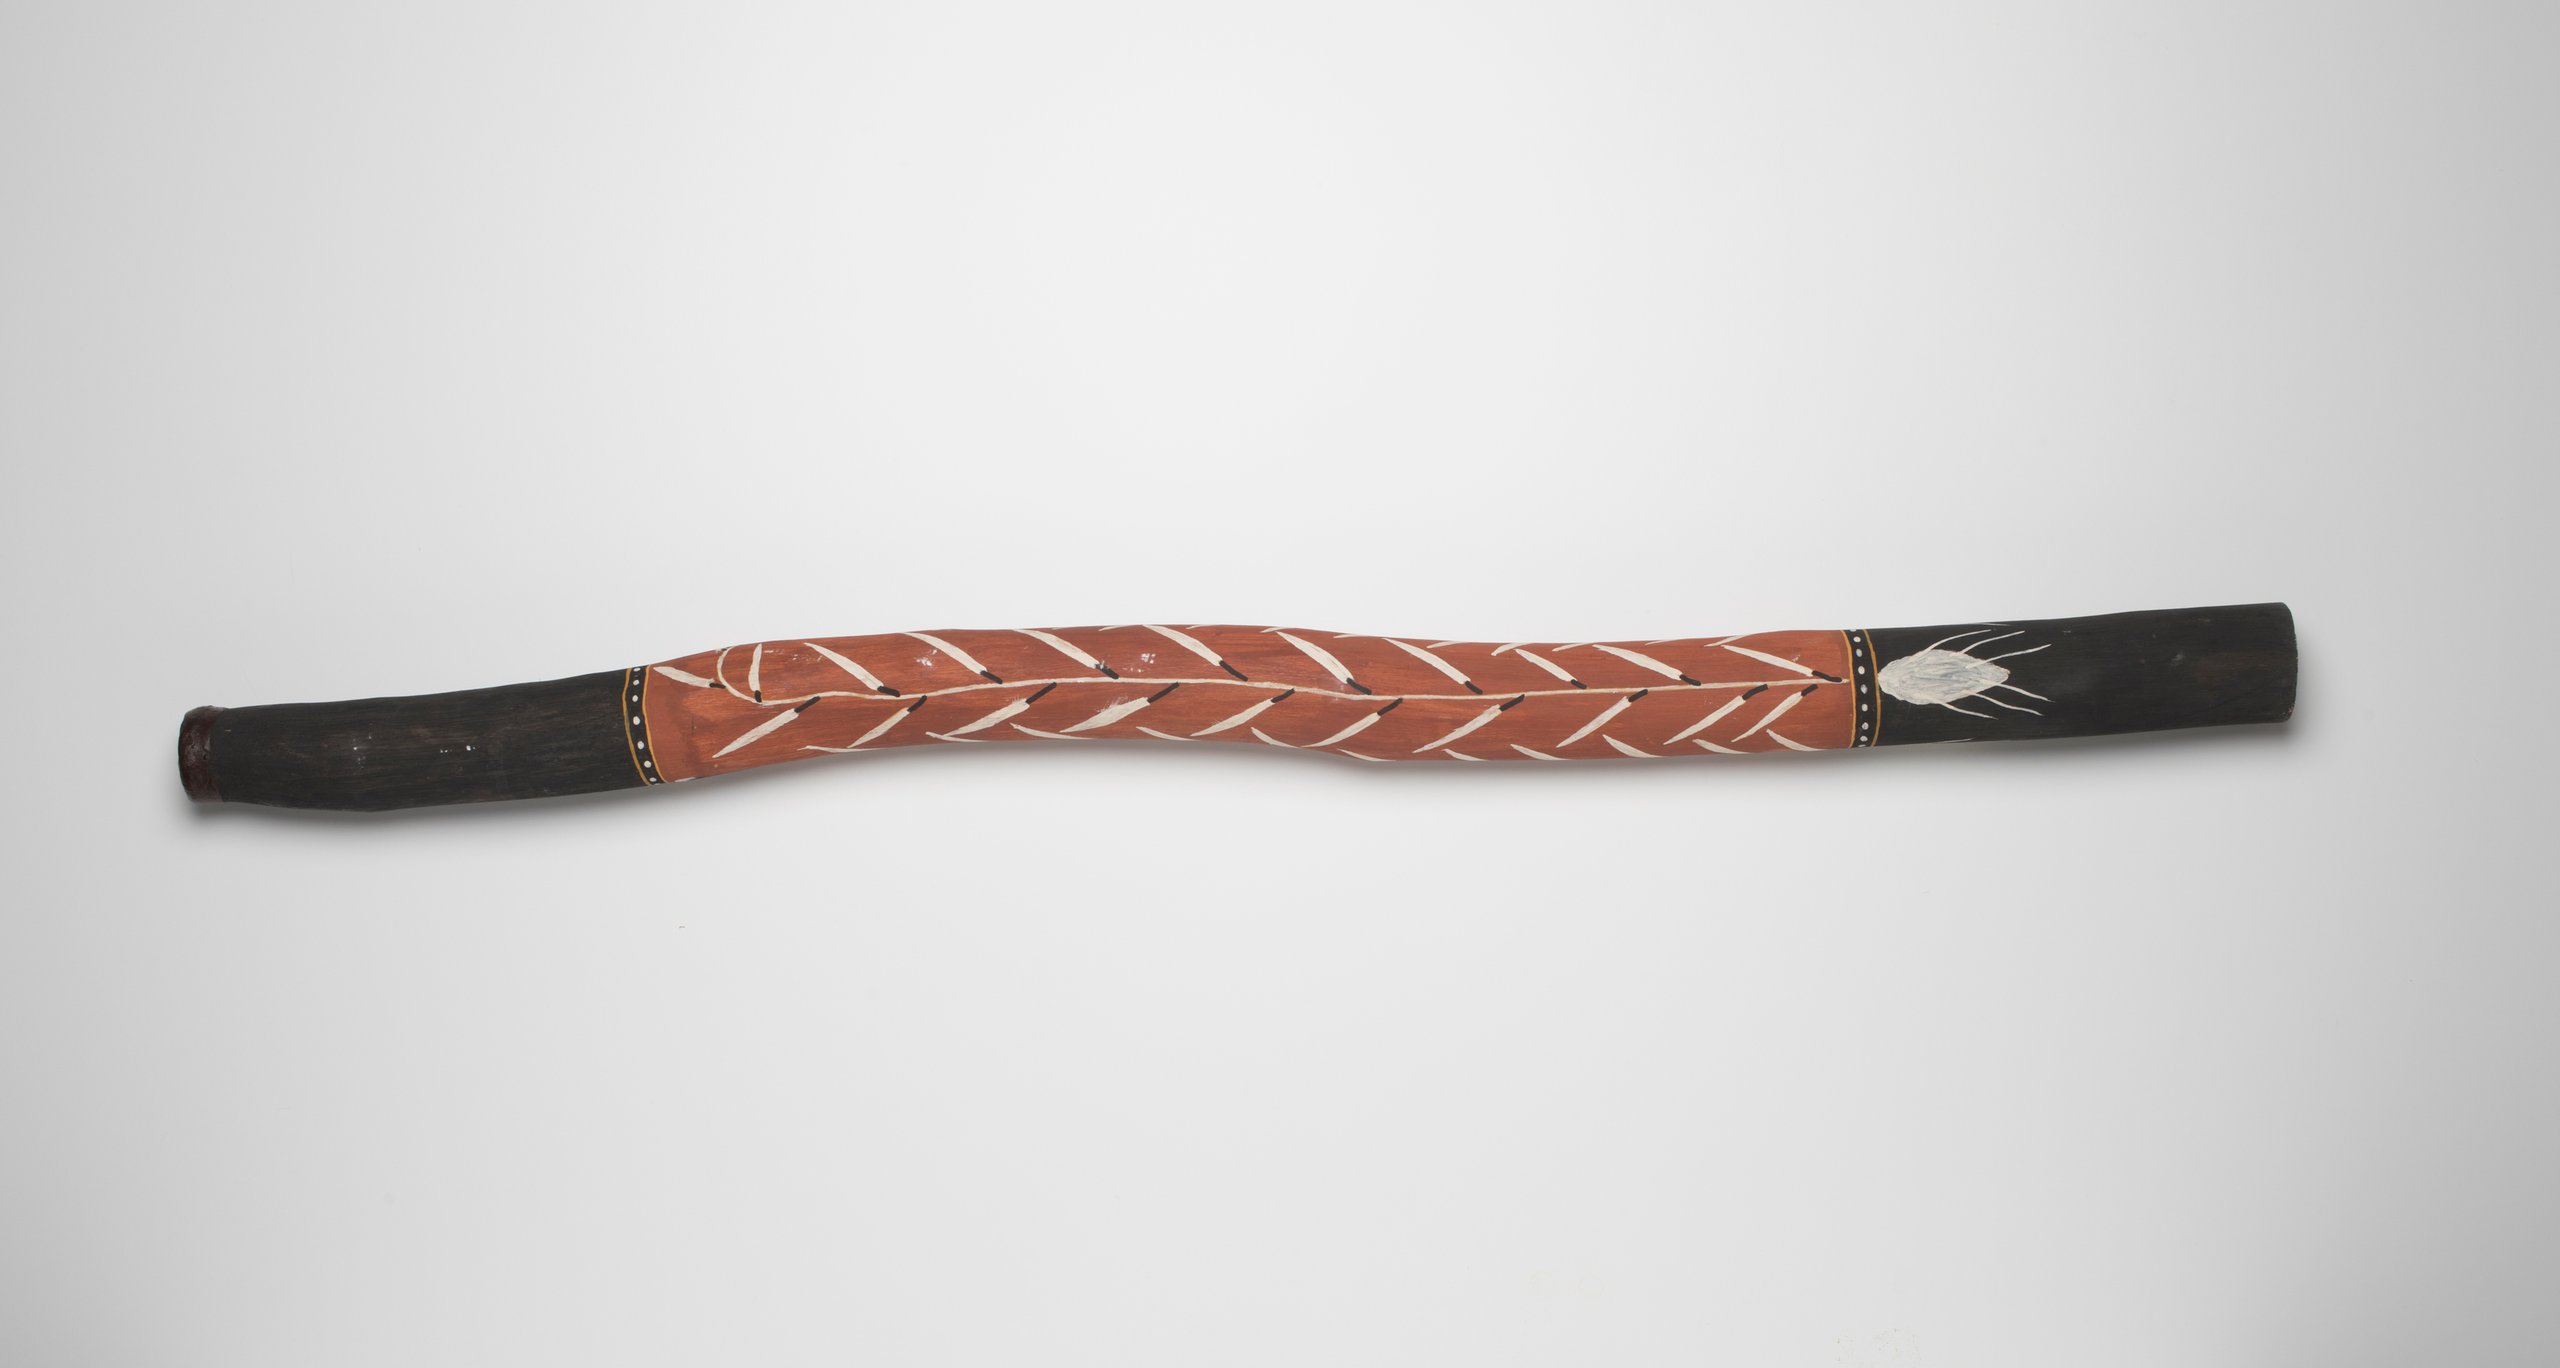 Didgeridoo (didjeridu), made and decorated by Gerard Yirawala